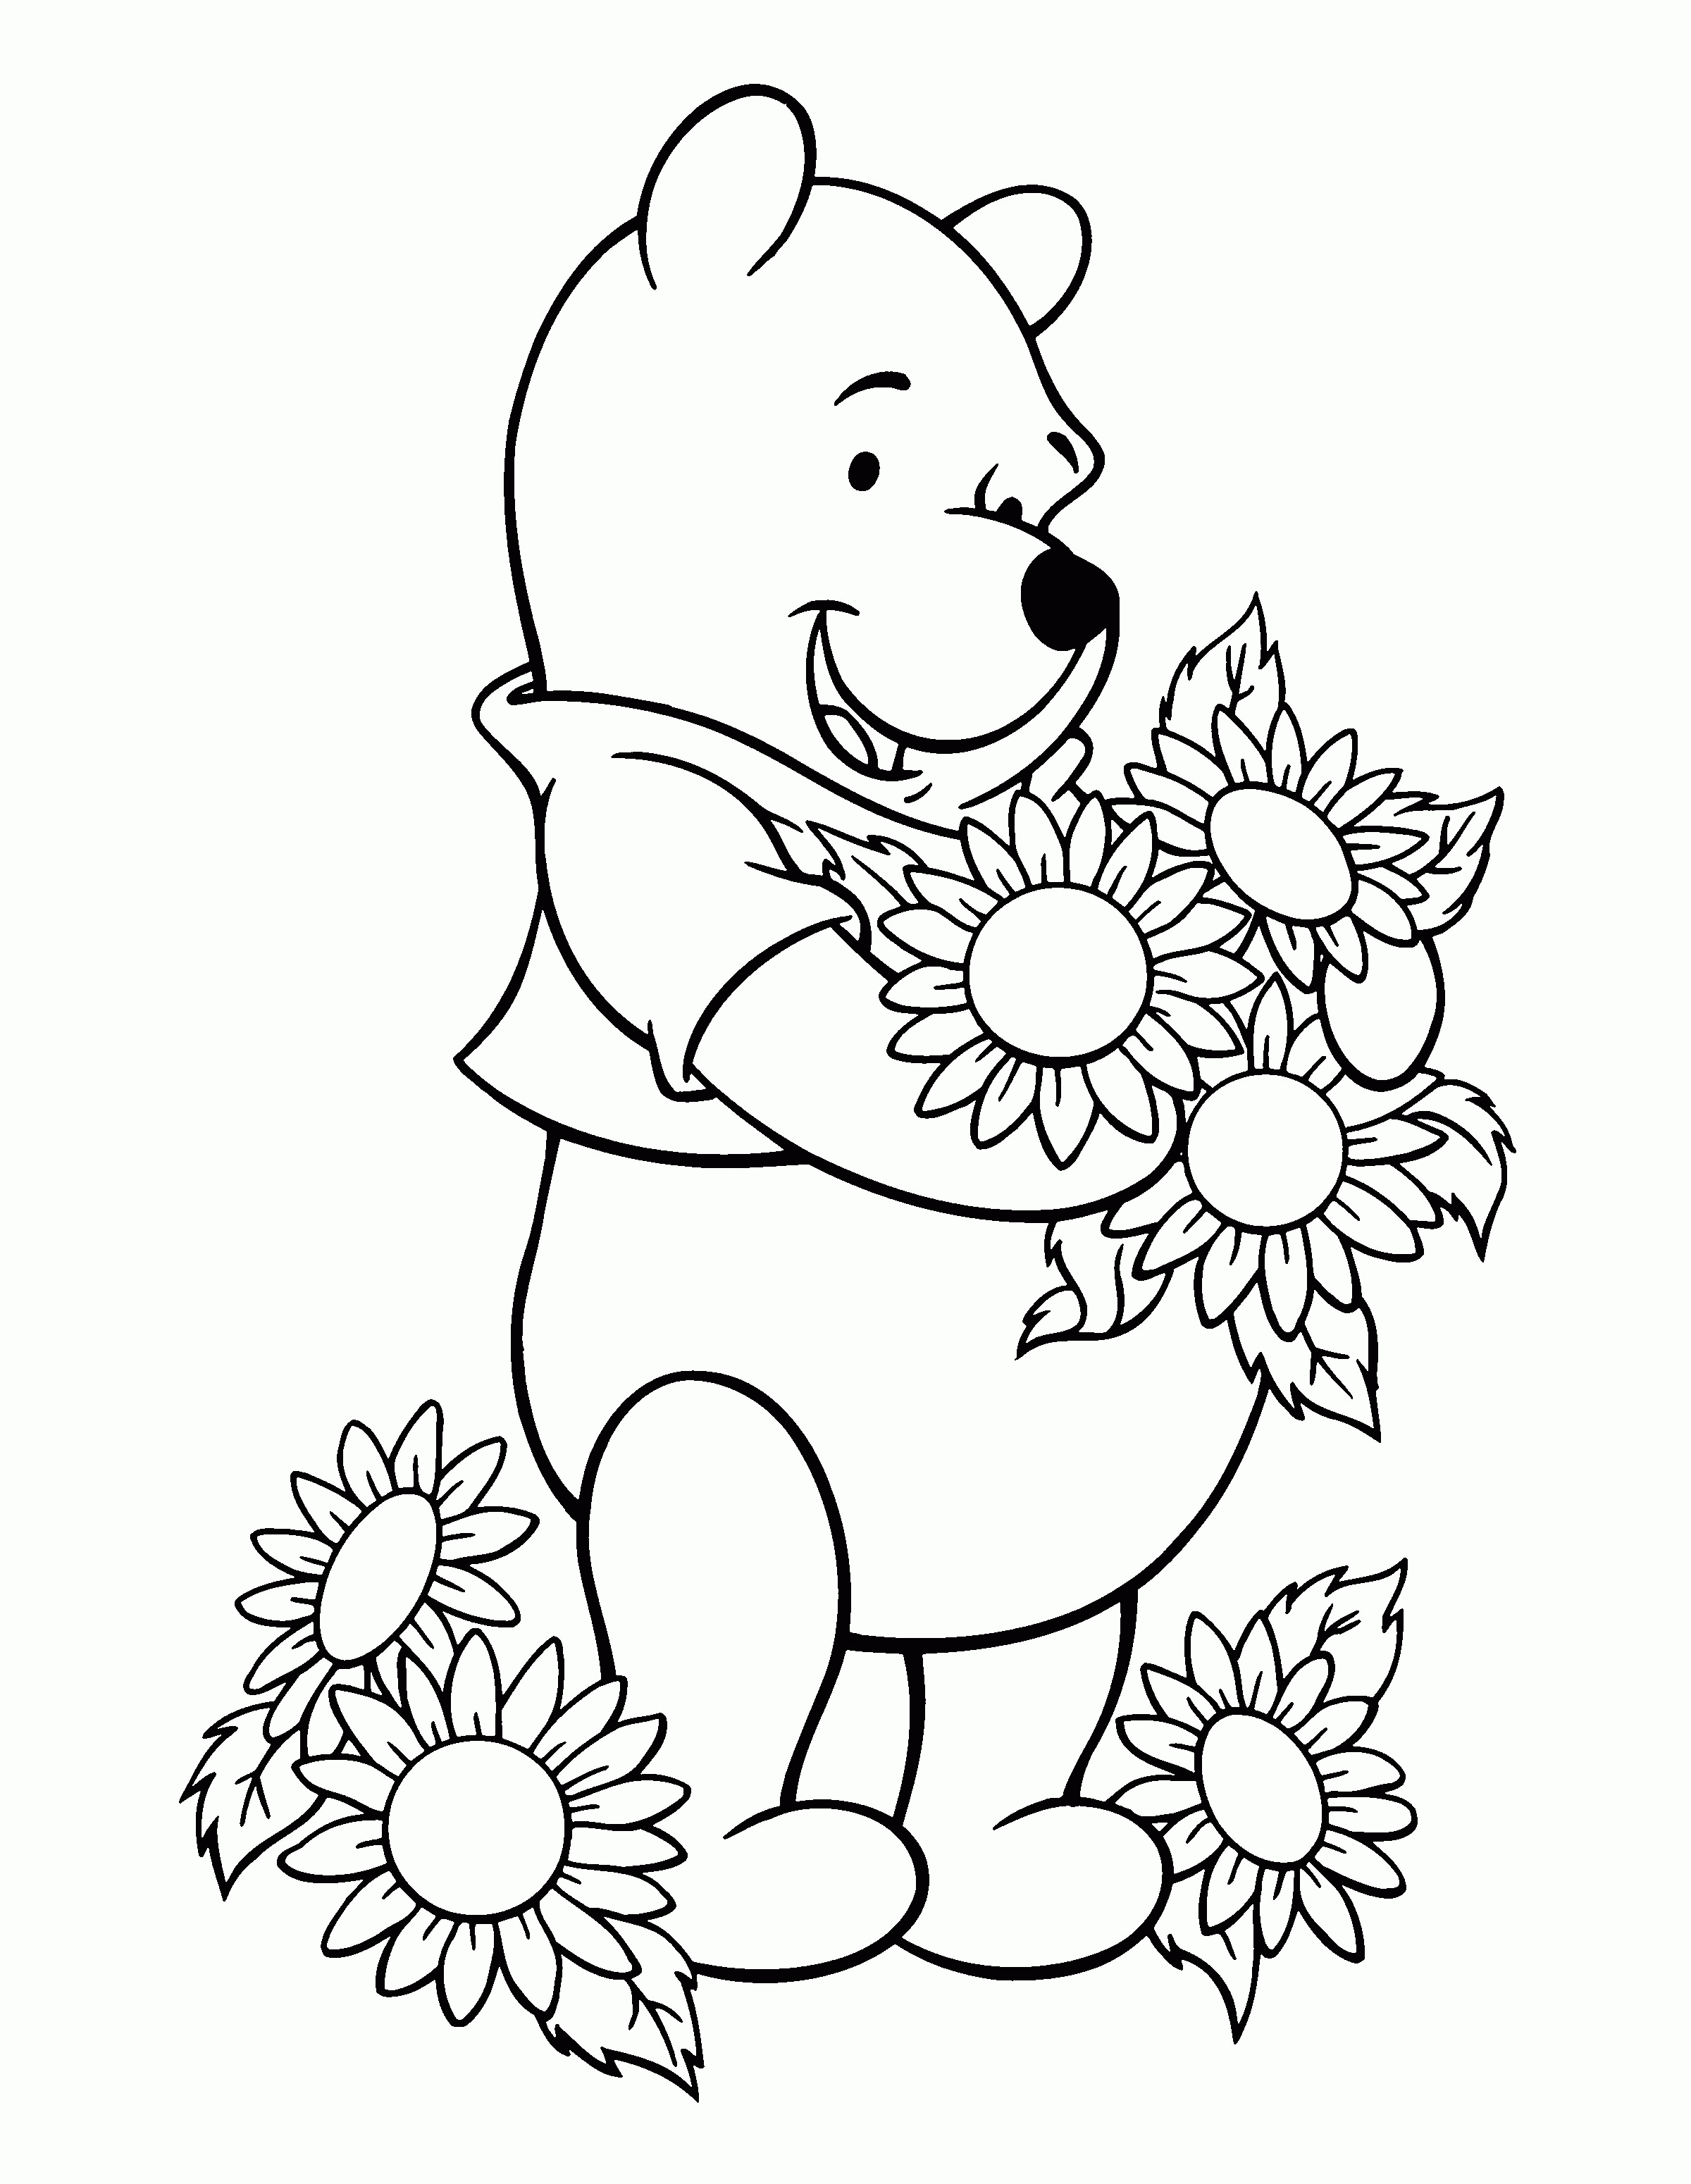 Free Pooh Bear Coloring Sheets - Coloring Page